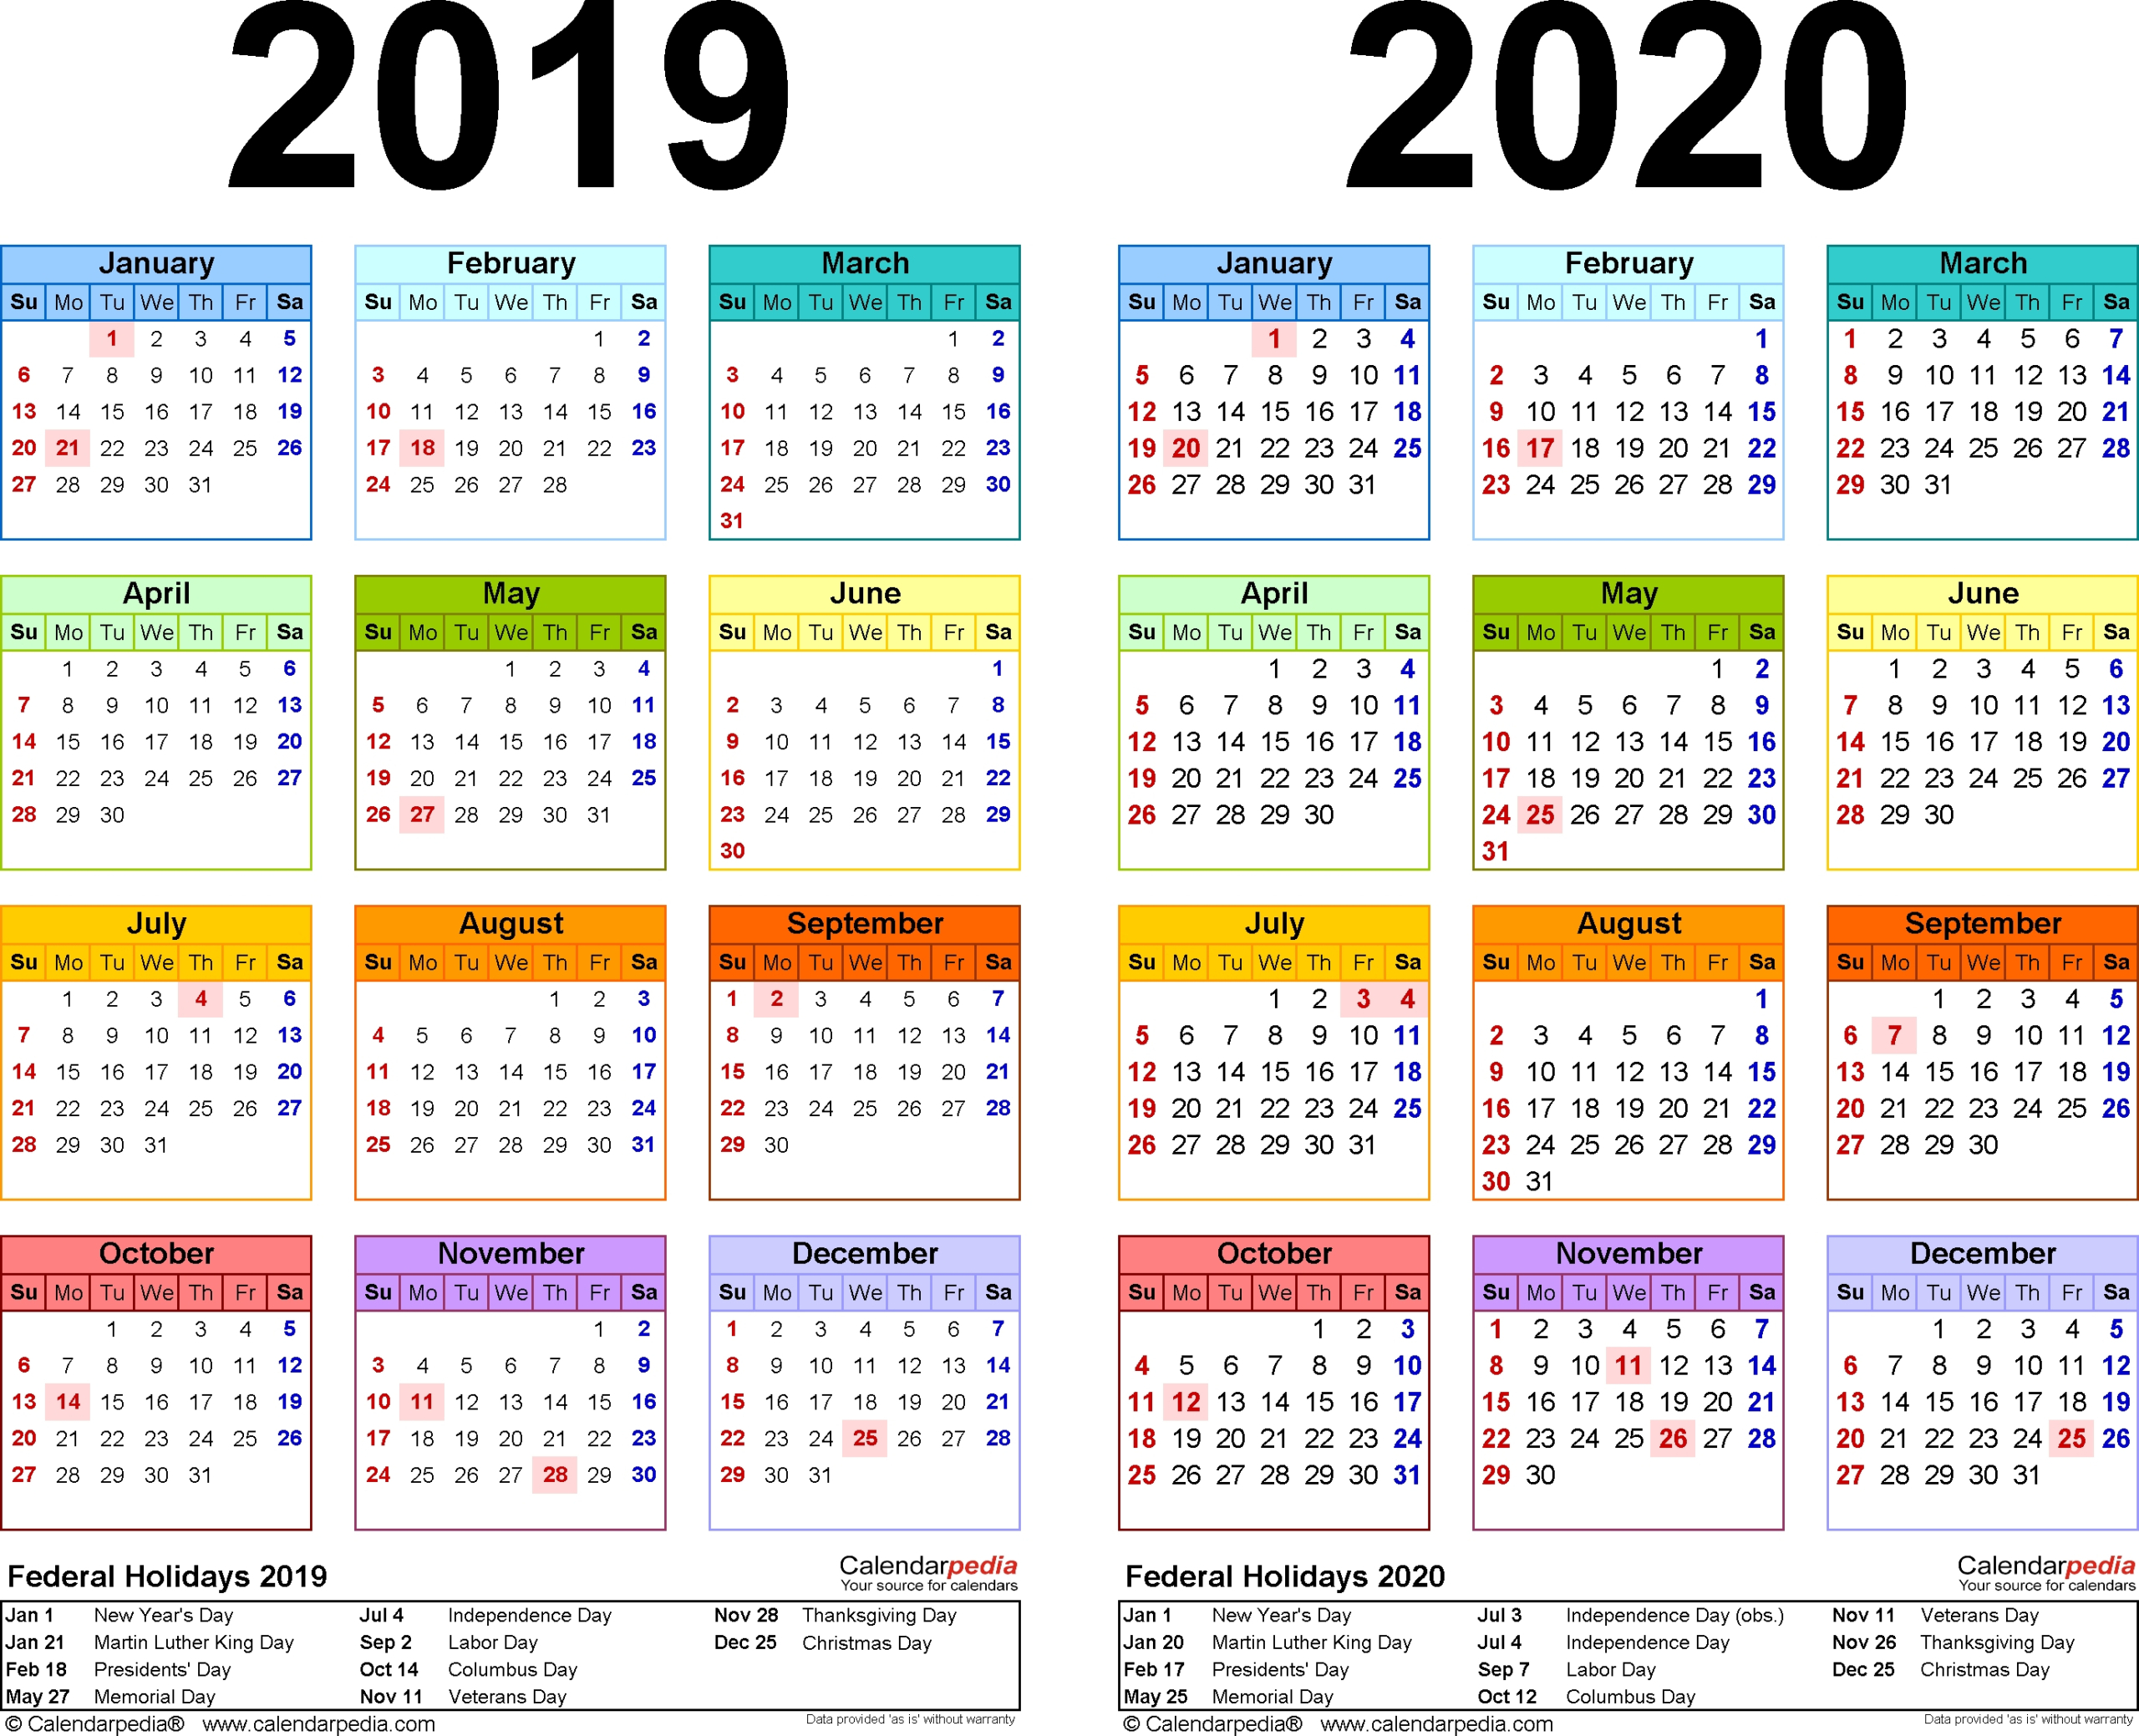 Depo Date Chart October | Example Calendar Printable  Sepo Peovwra Cjart